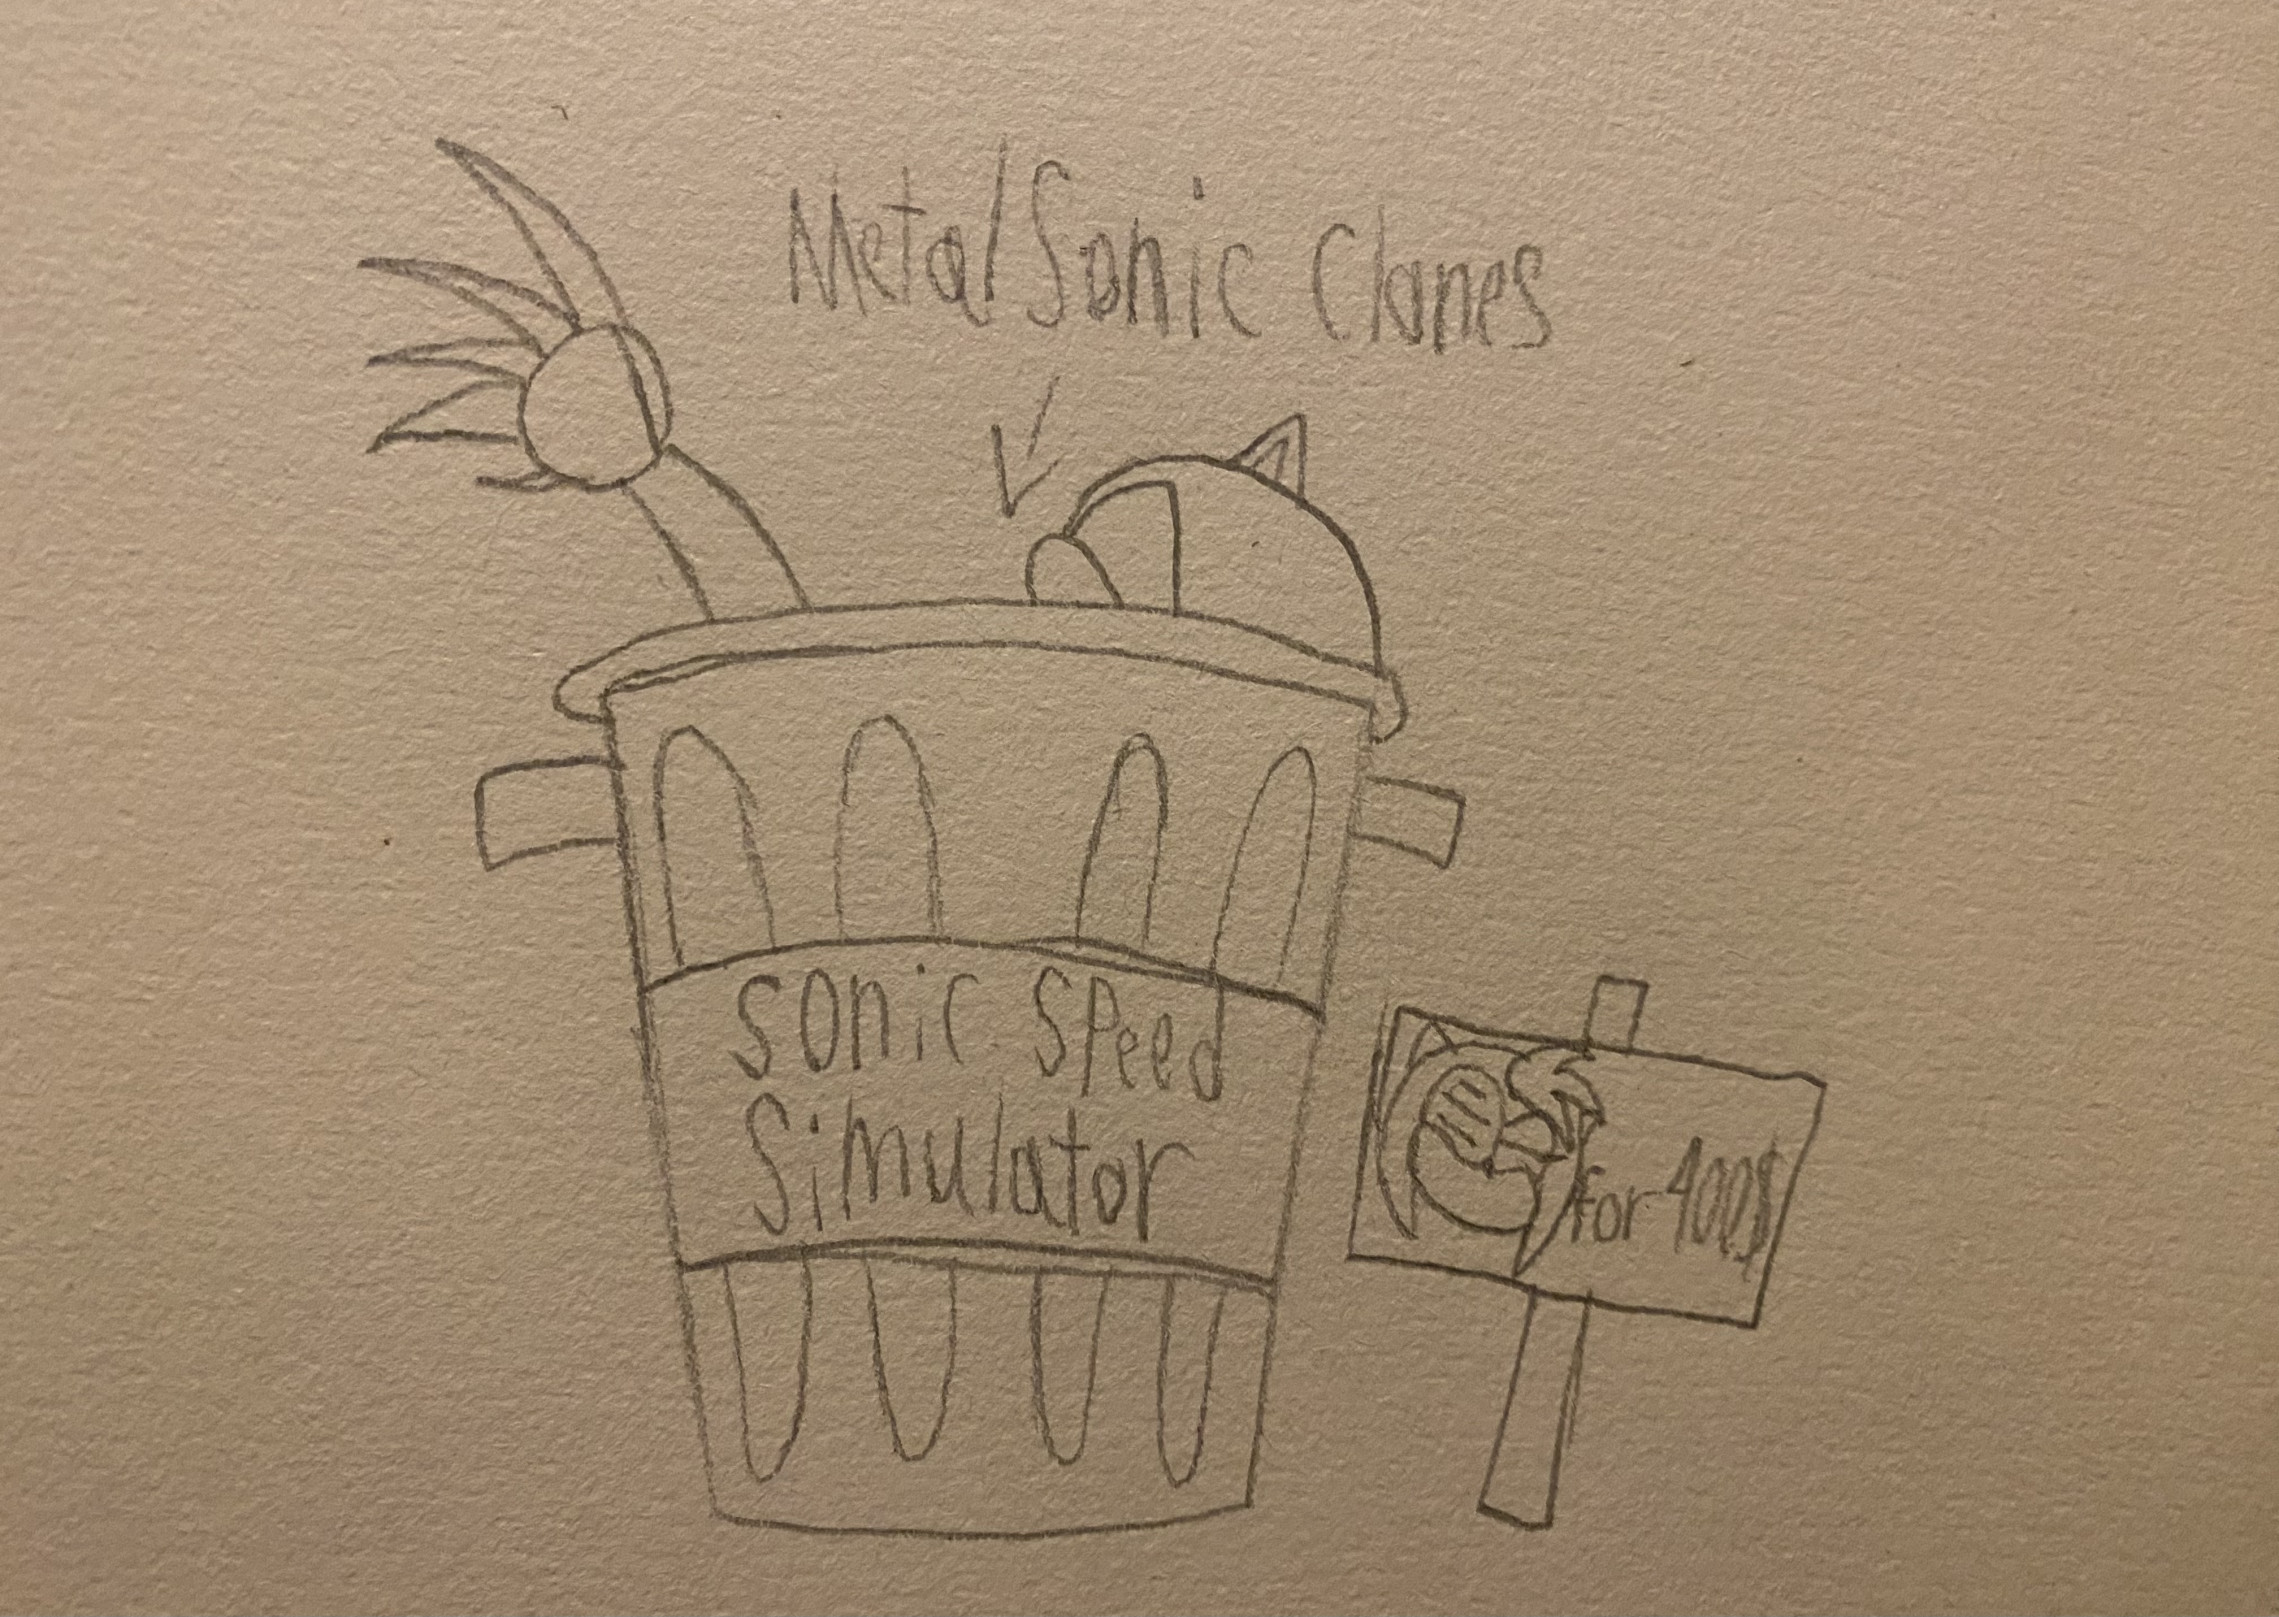 Sonic Speed Simulator is garbage by SpringbonniDreamer1987 -- Fur Affinity  [dot] net